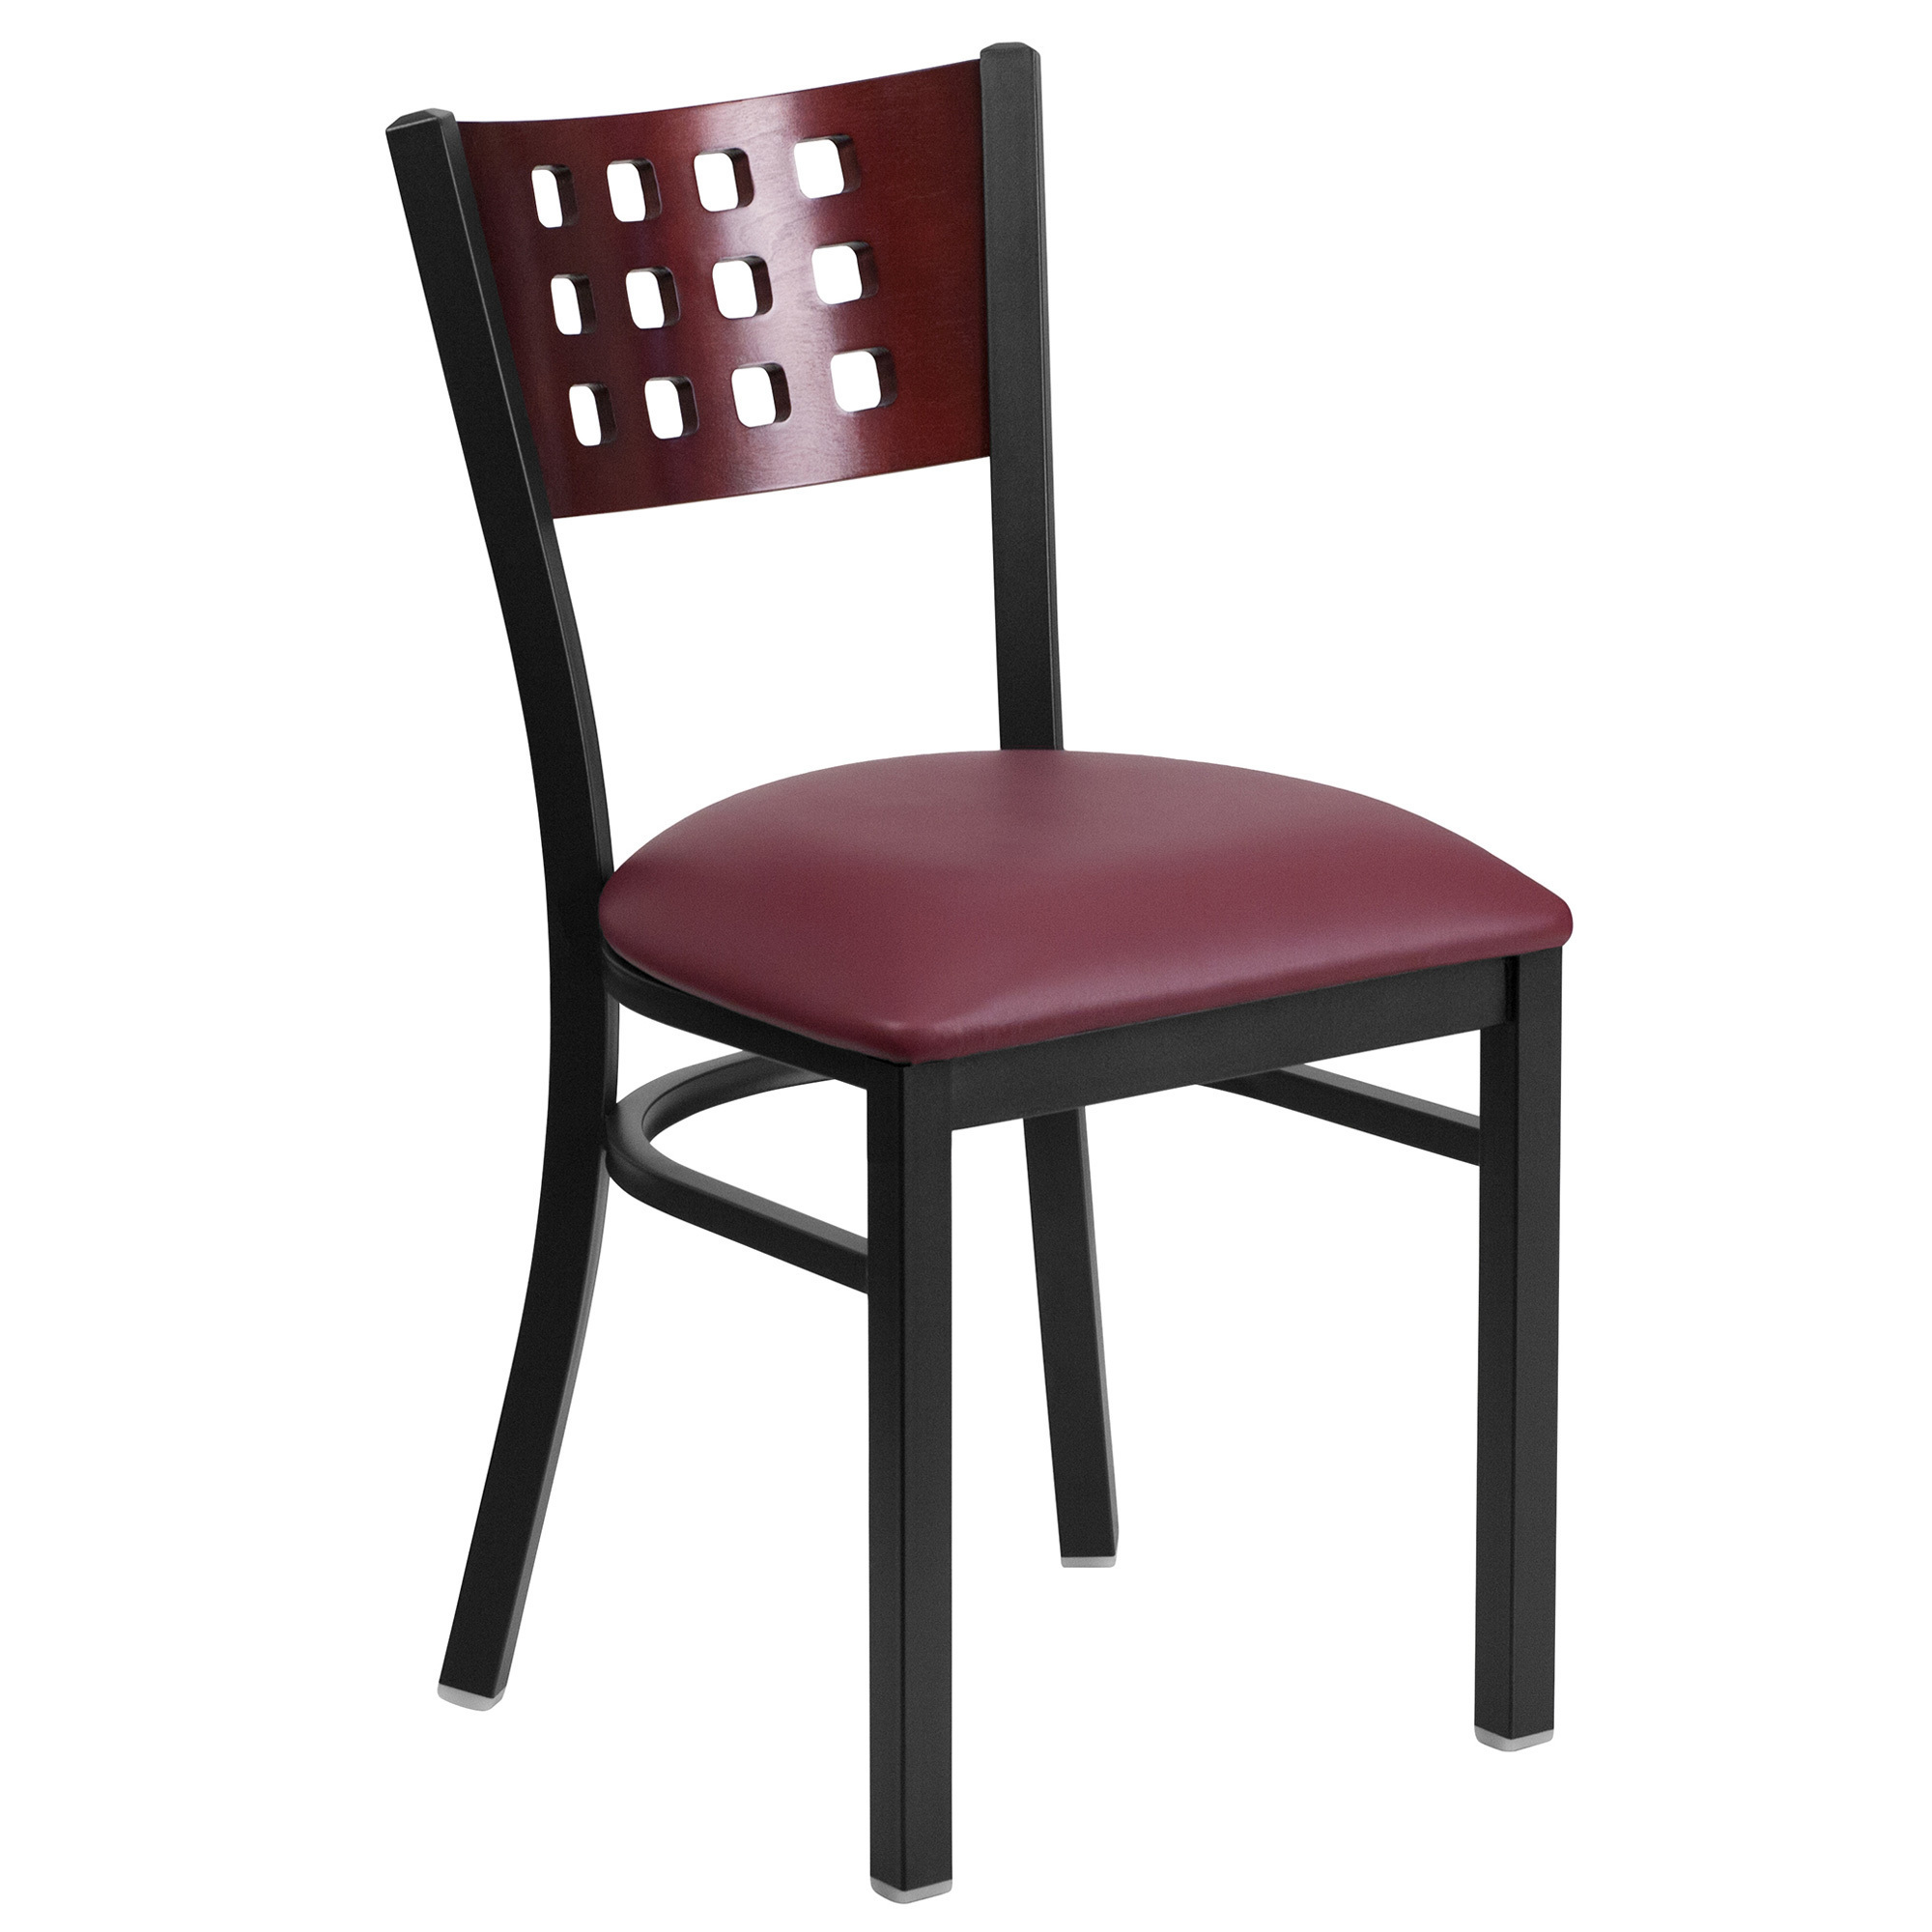 Flash Furniture Black Metal Chair with Wood Cutout Back â Mahogany Wood Back/Burgundy Vinyl Seat, 500-Lb. Capacity, Model XUDG117MAHBGV